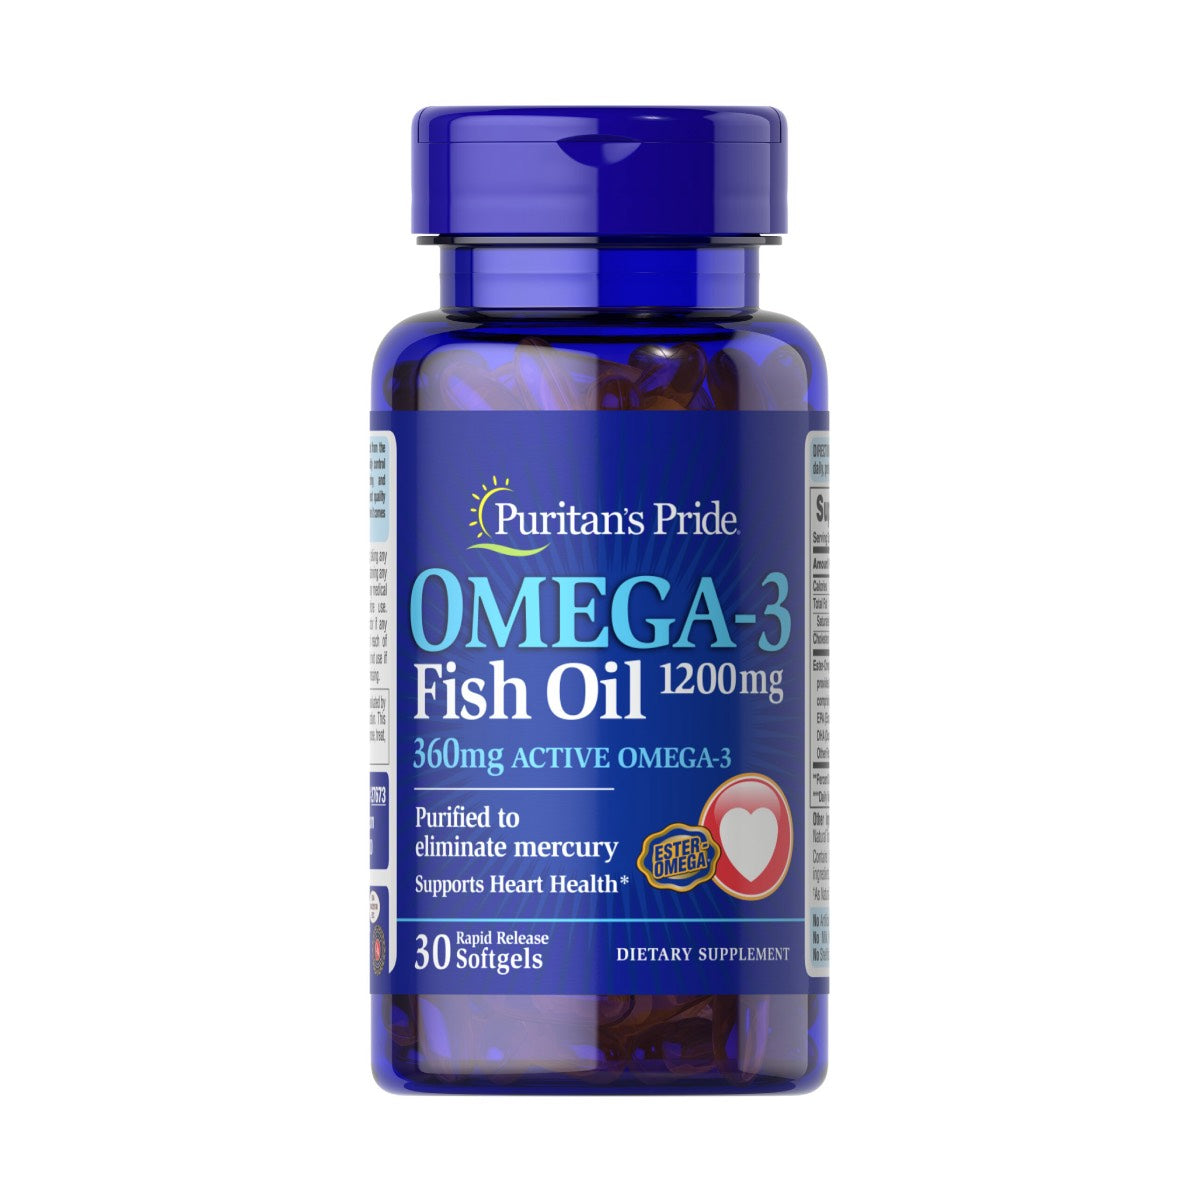 Puritan's Pride, Omega 3 Fish Oil 1200 mg (360 mg Active Omega-3)